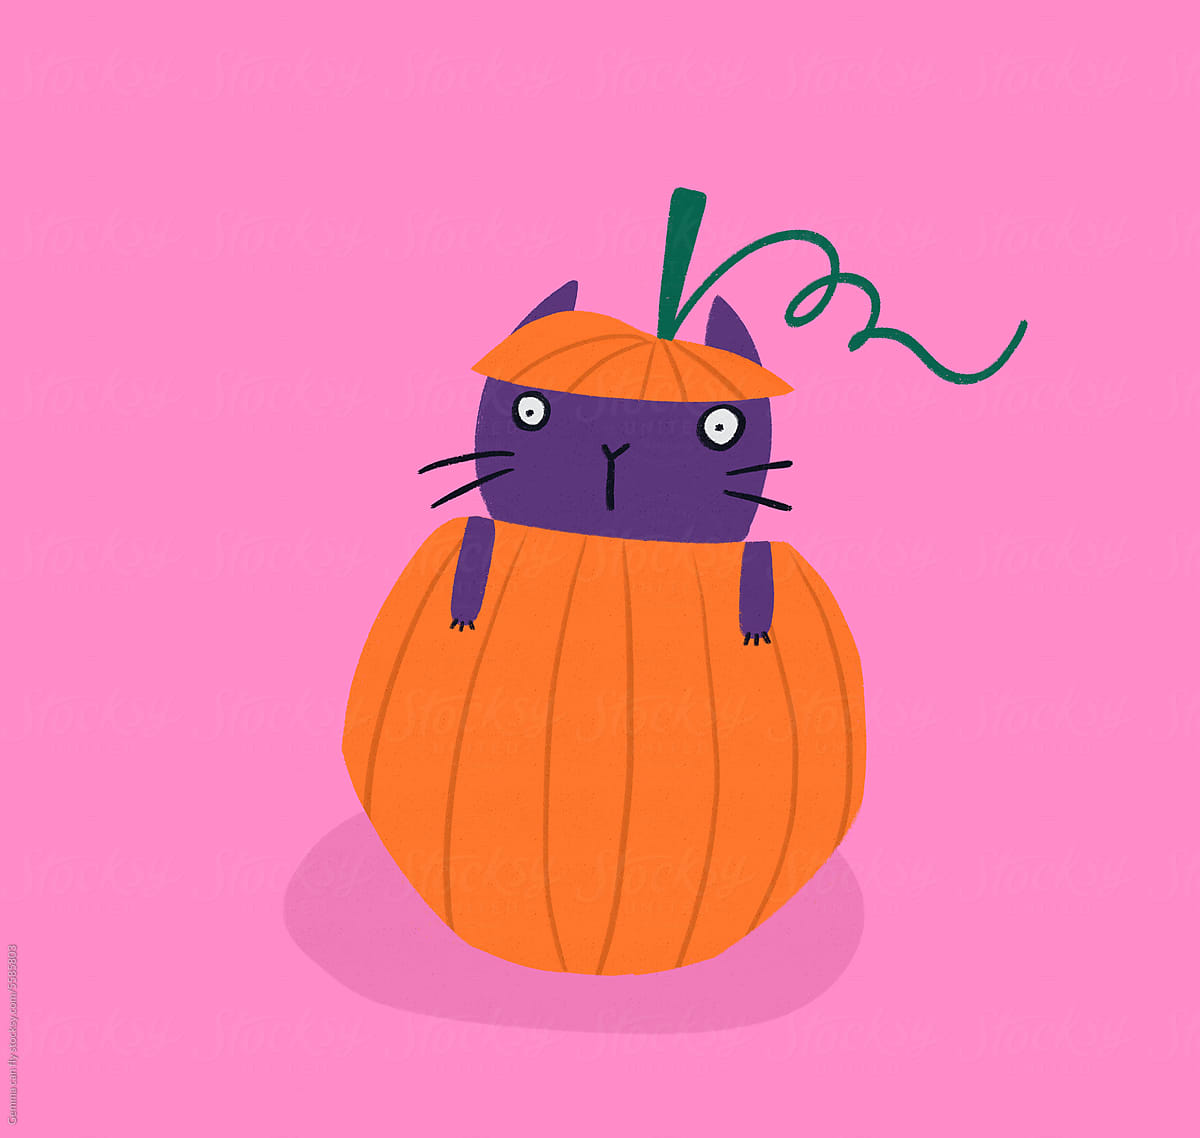 Scary cat inside a pumpkin. Halloween illustration